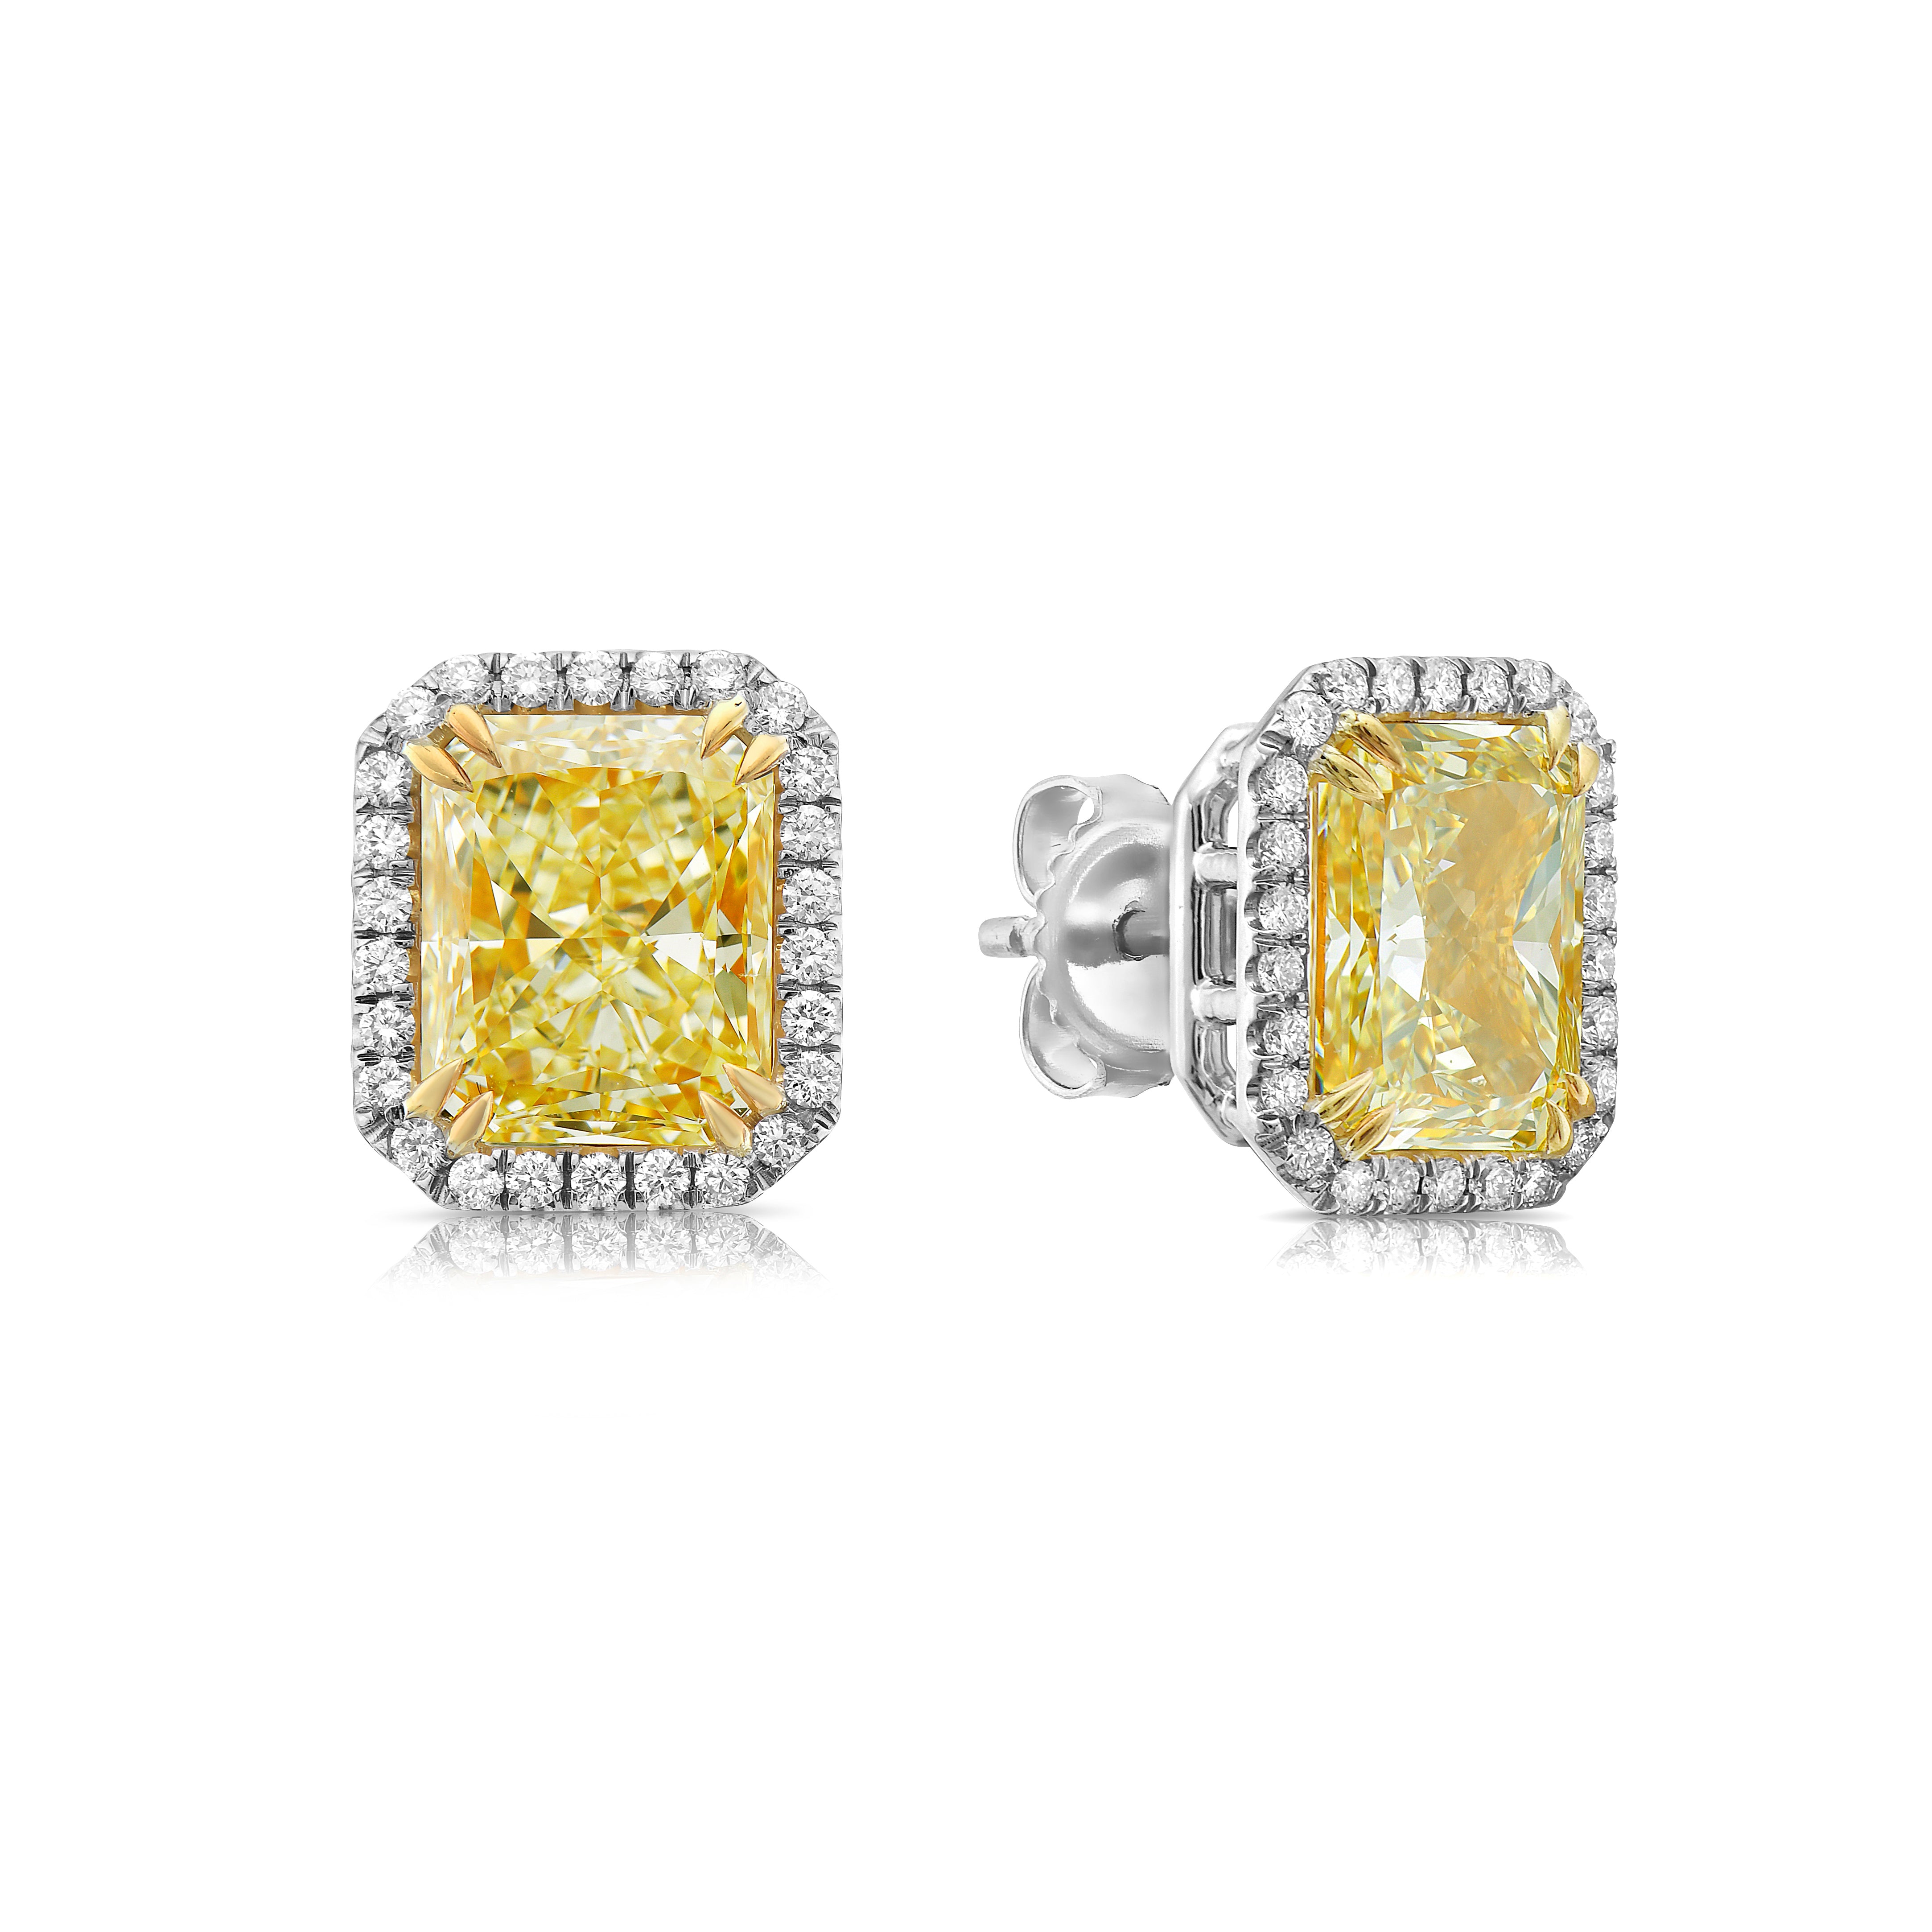 6ct GIA Light Yellow Diamond Earrings